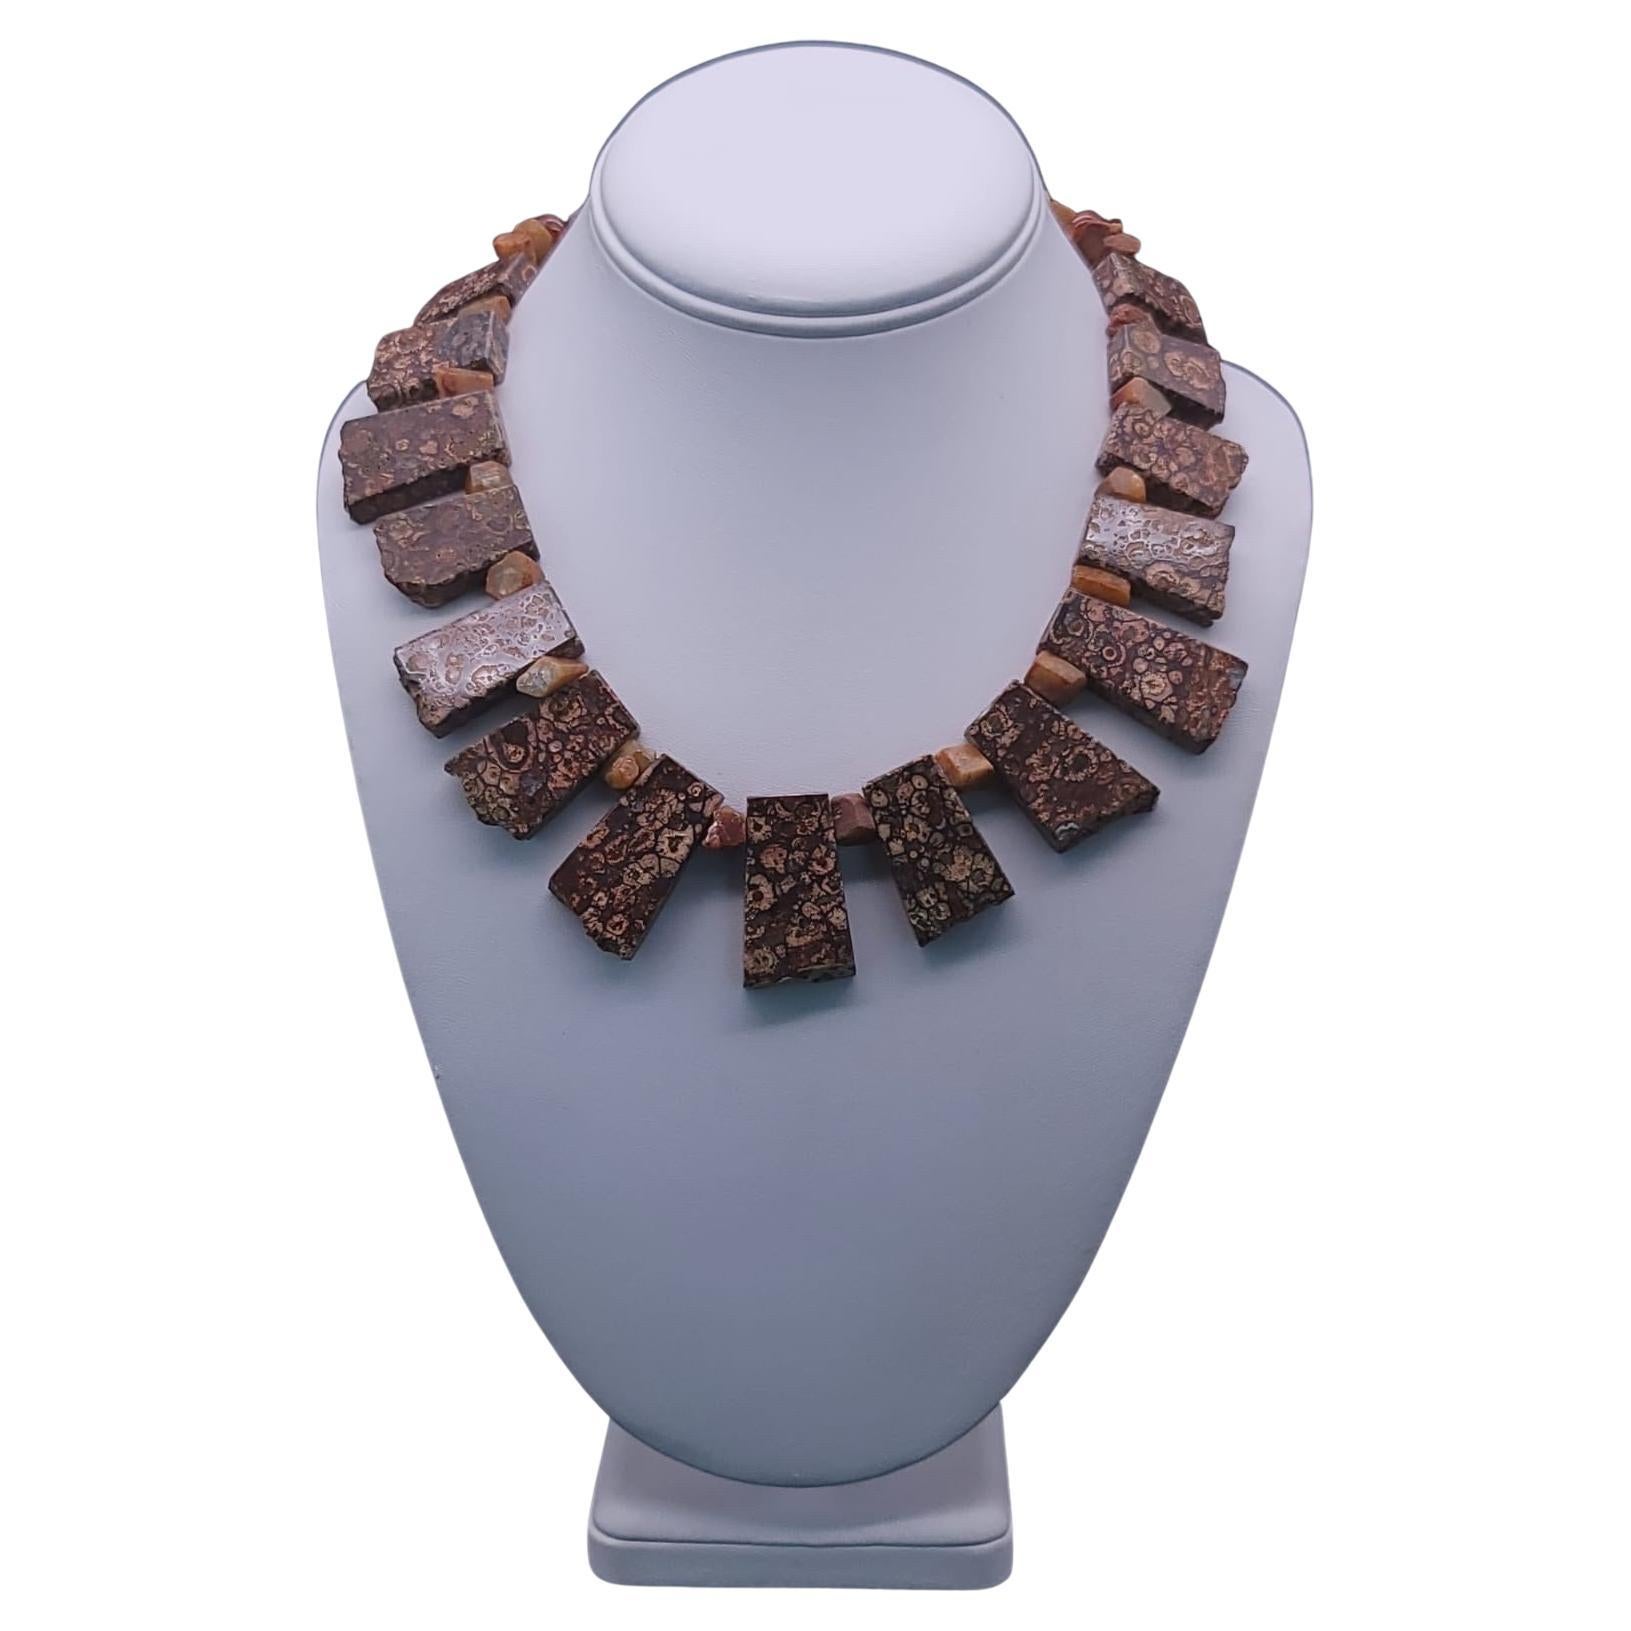 A.Jeschel  Unusual Mexican Jasper plates necklace